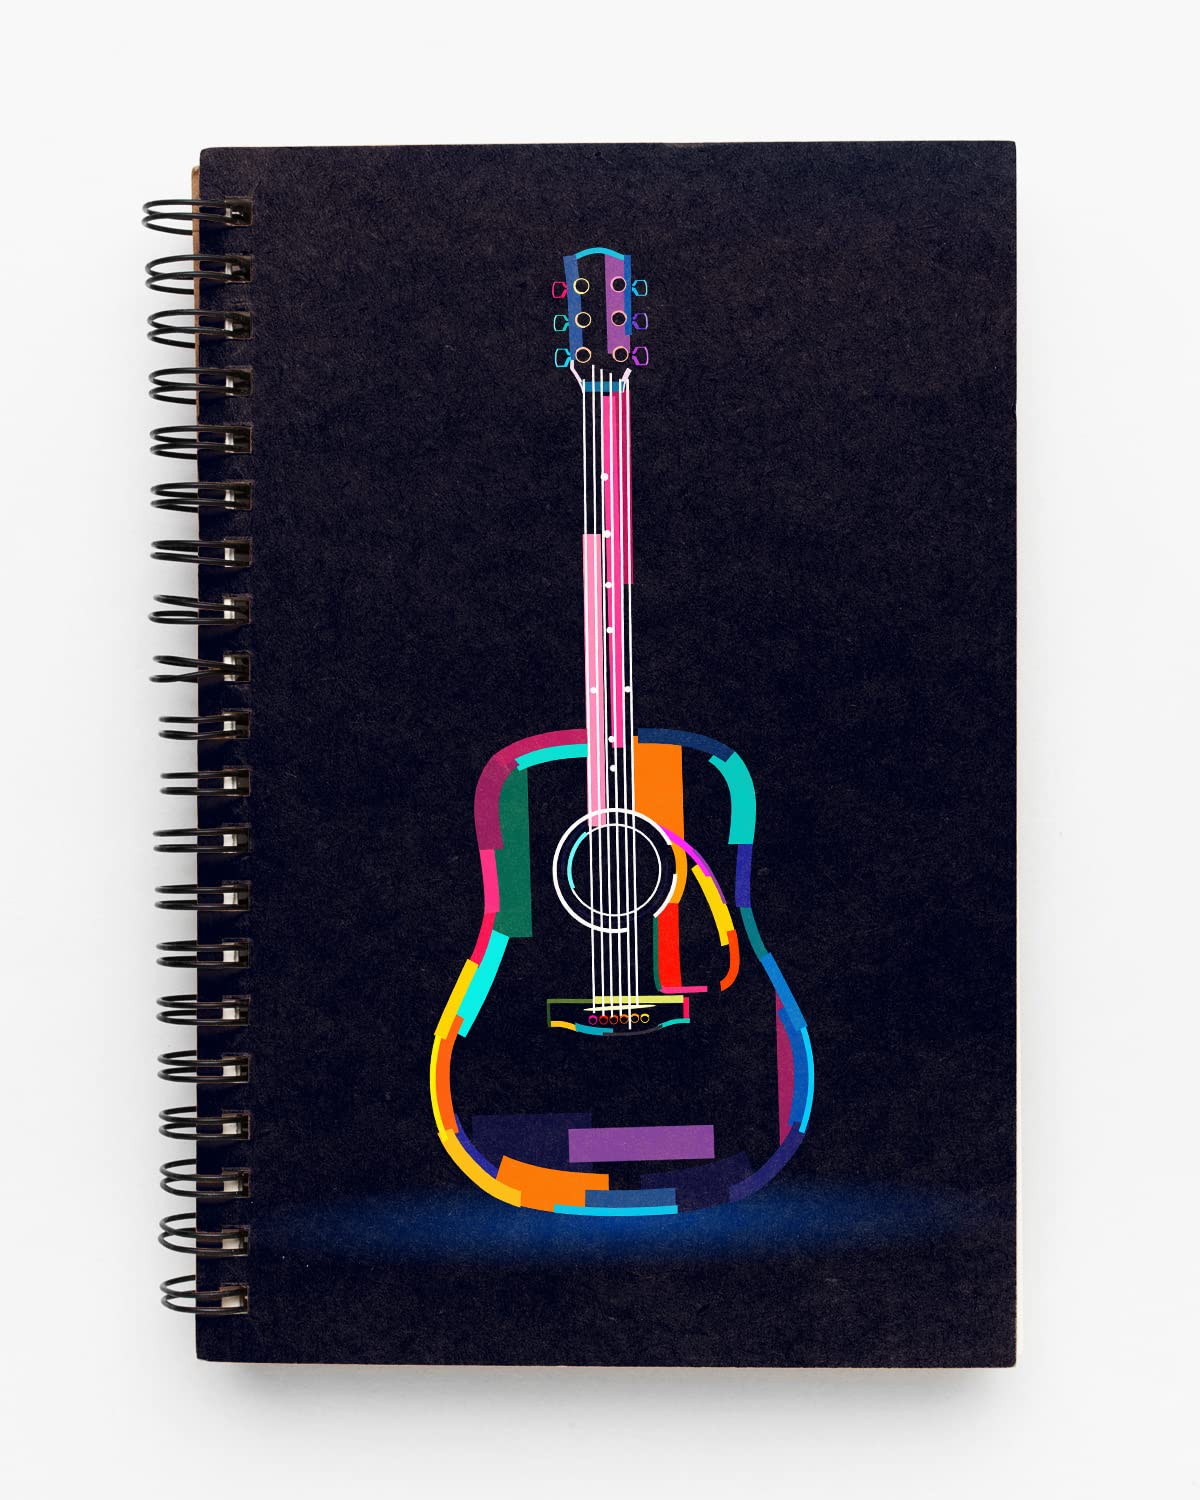 Abstract Guitar Spiral Notebook